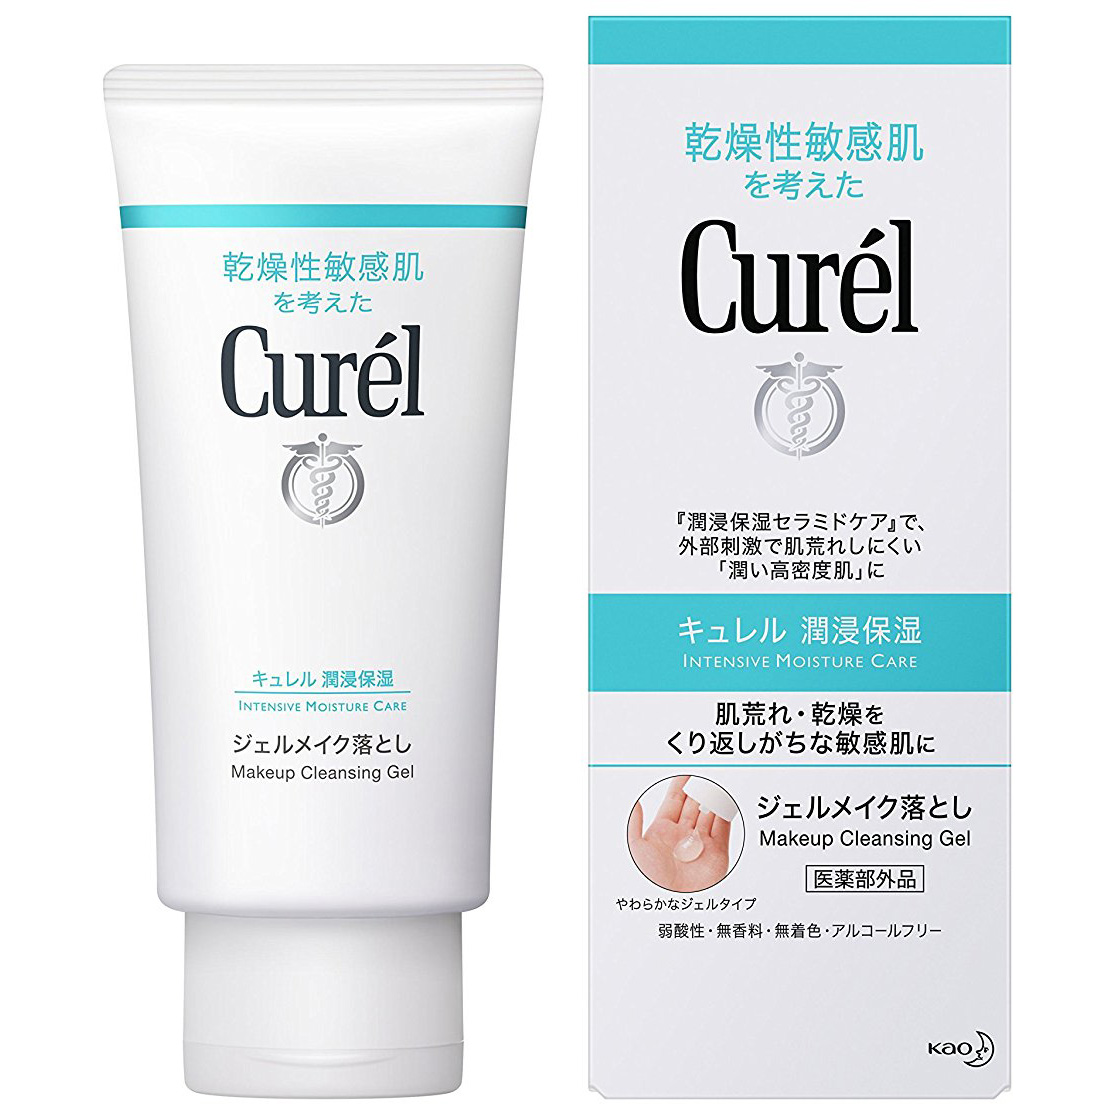 Curel/珂润润浸保湿卸妆啫喱130g